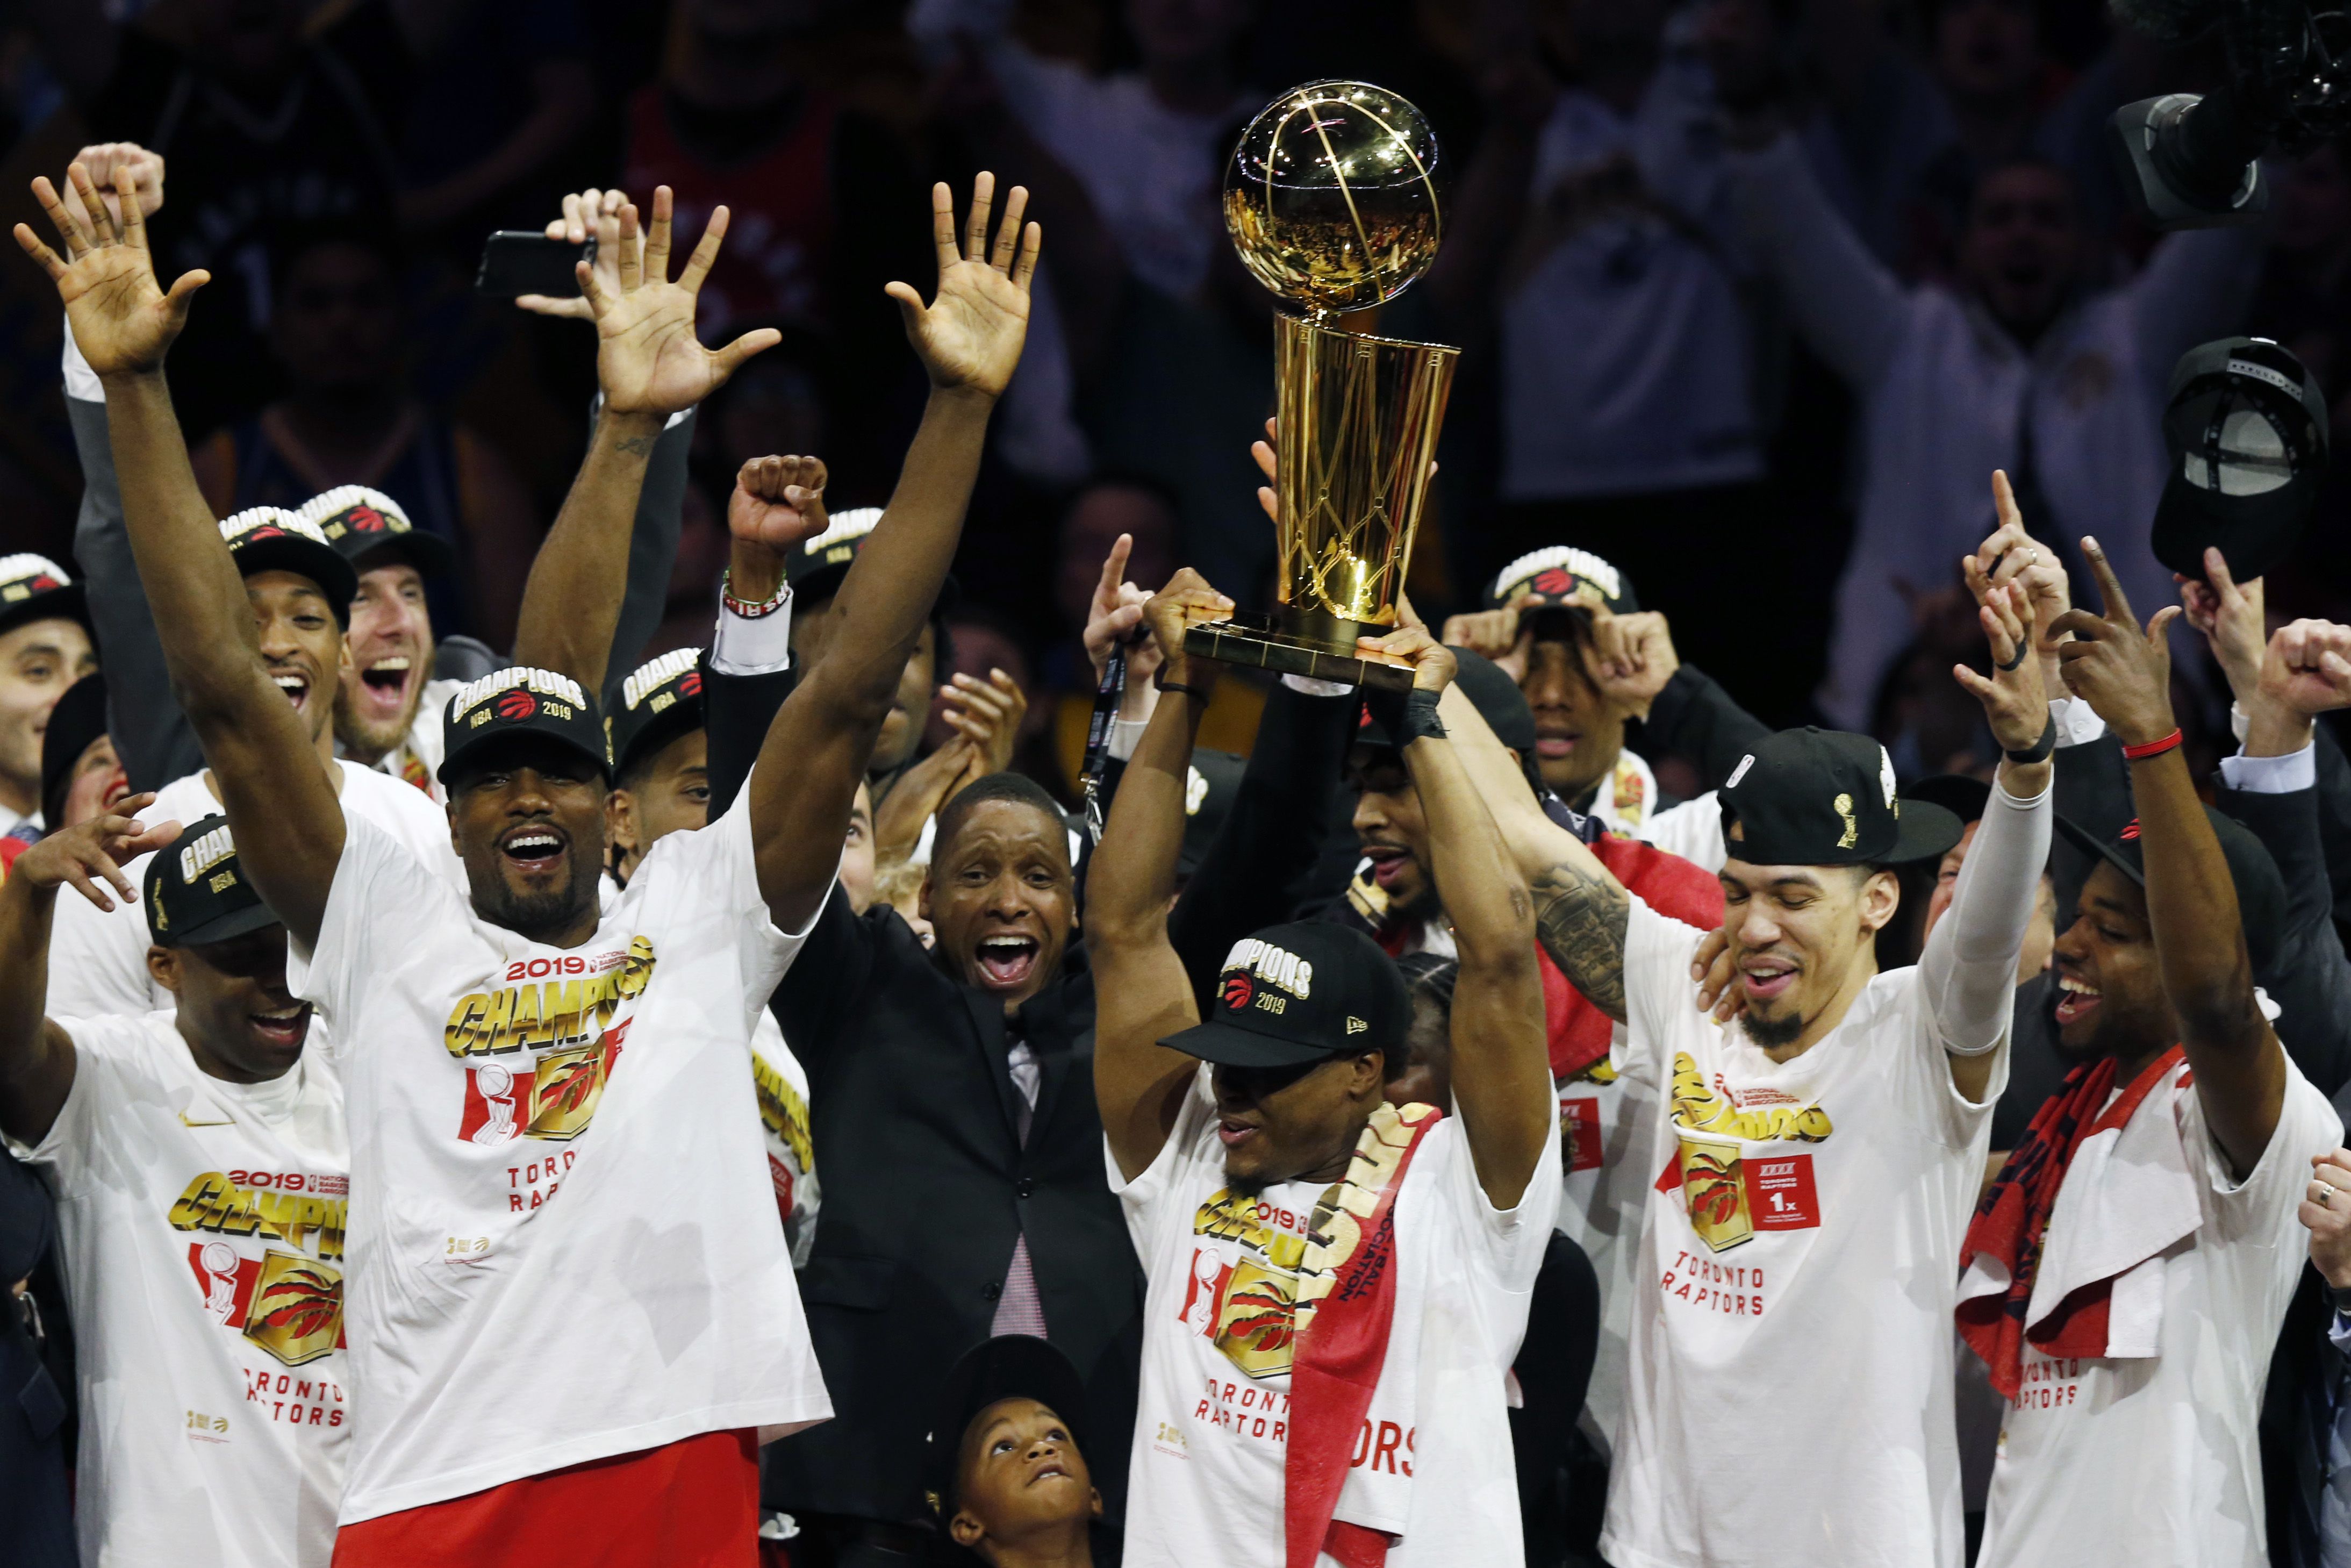 Will Drake wear Kevin Durant jersey if Warriors meet Raptors?